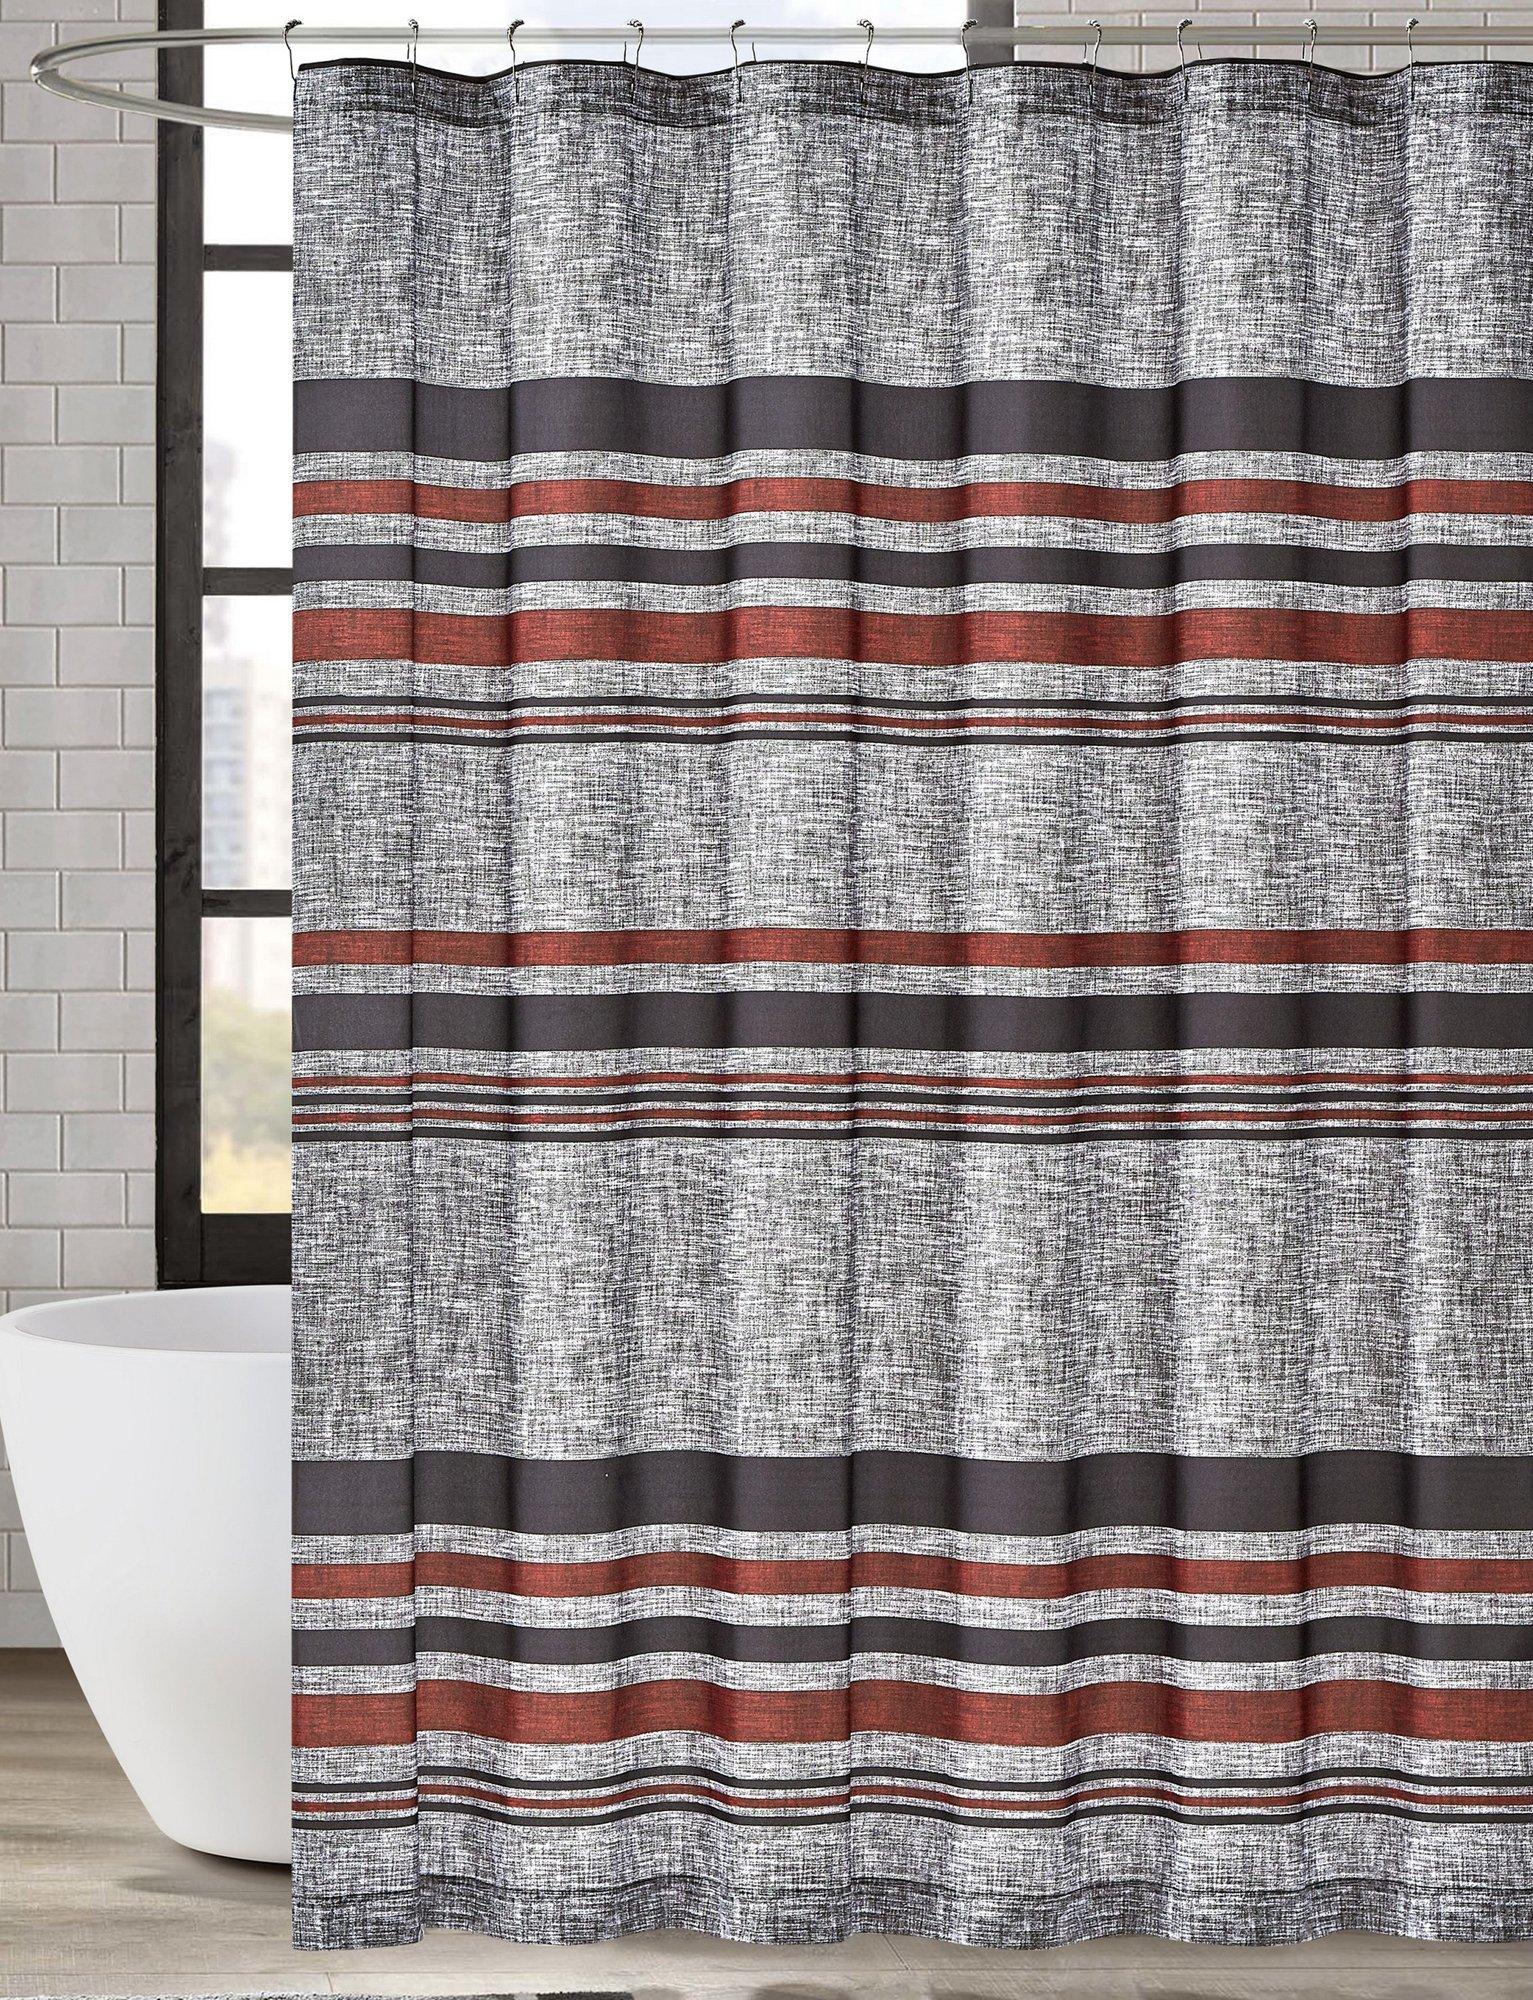 Warren Stripe Shower Curtain